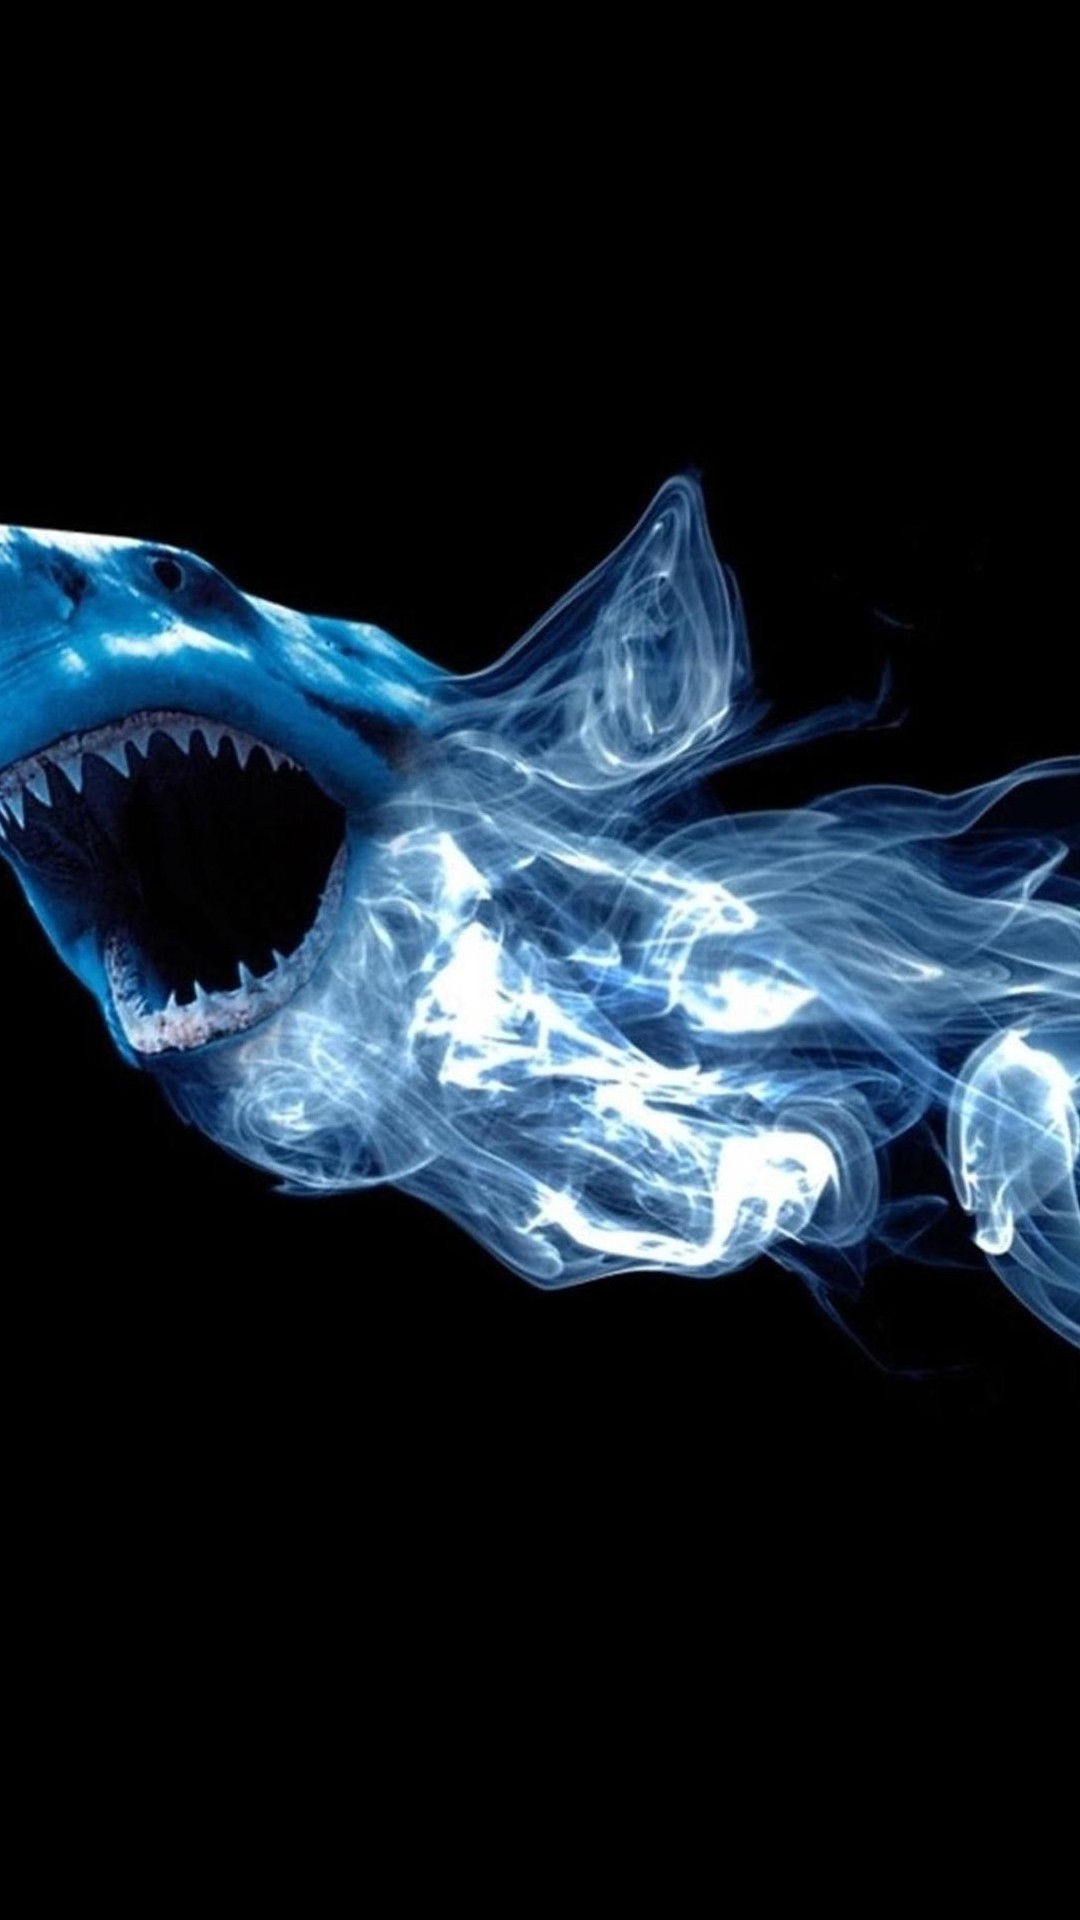 1080x1920 Abstract Shark Neon Light Smoke Android Wallpaper